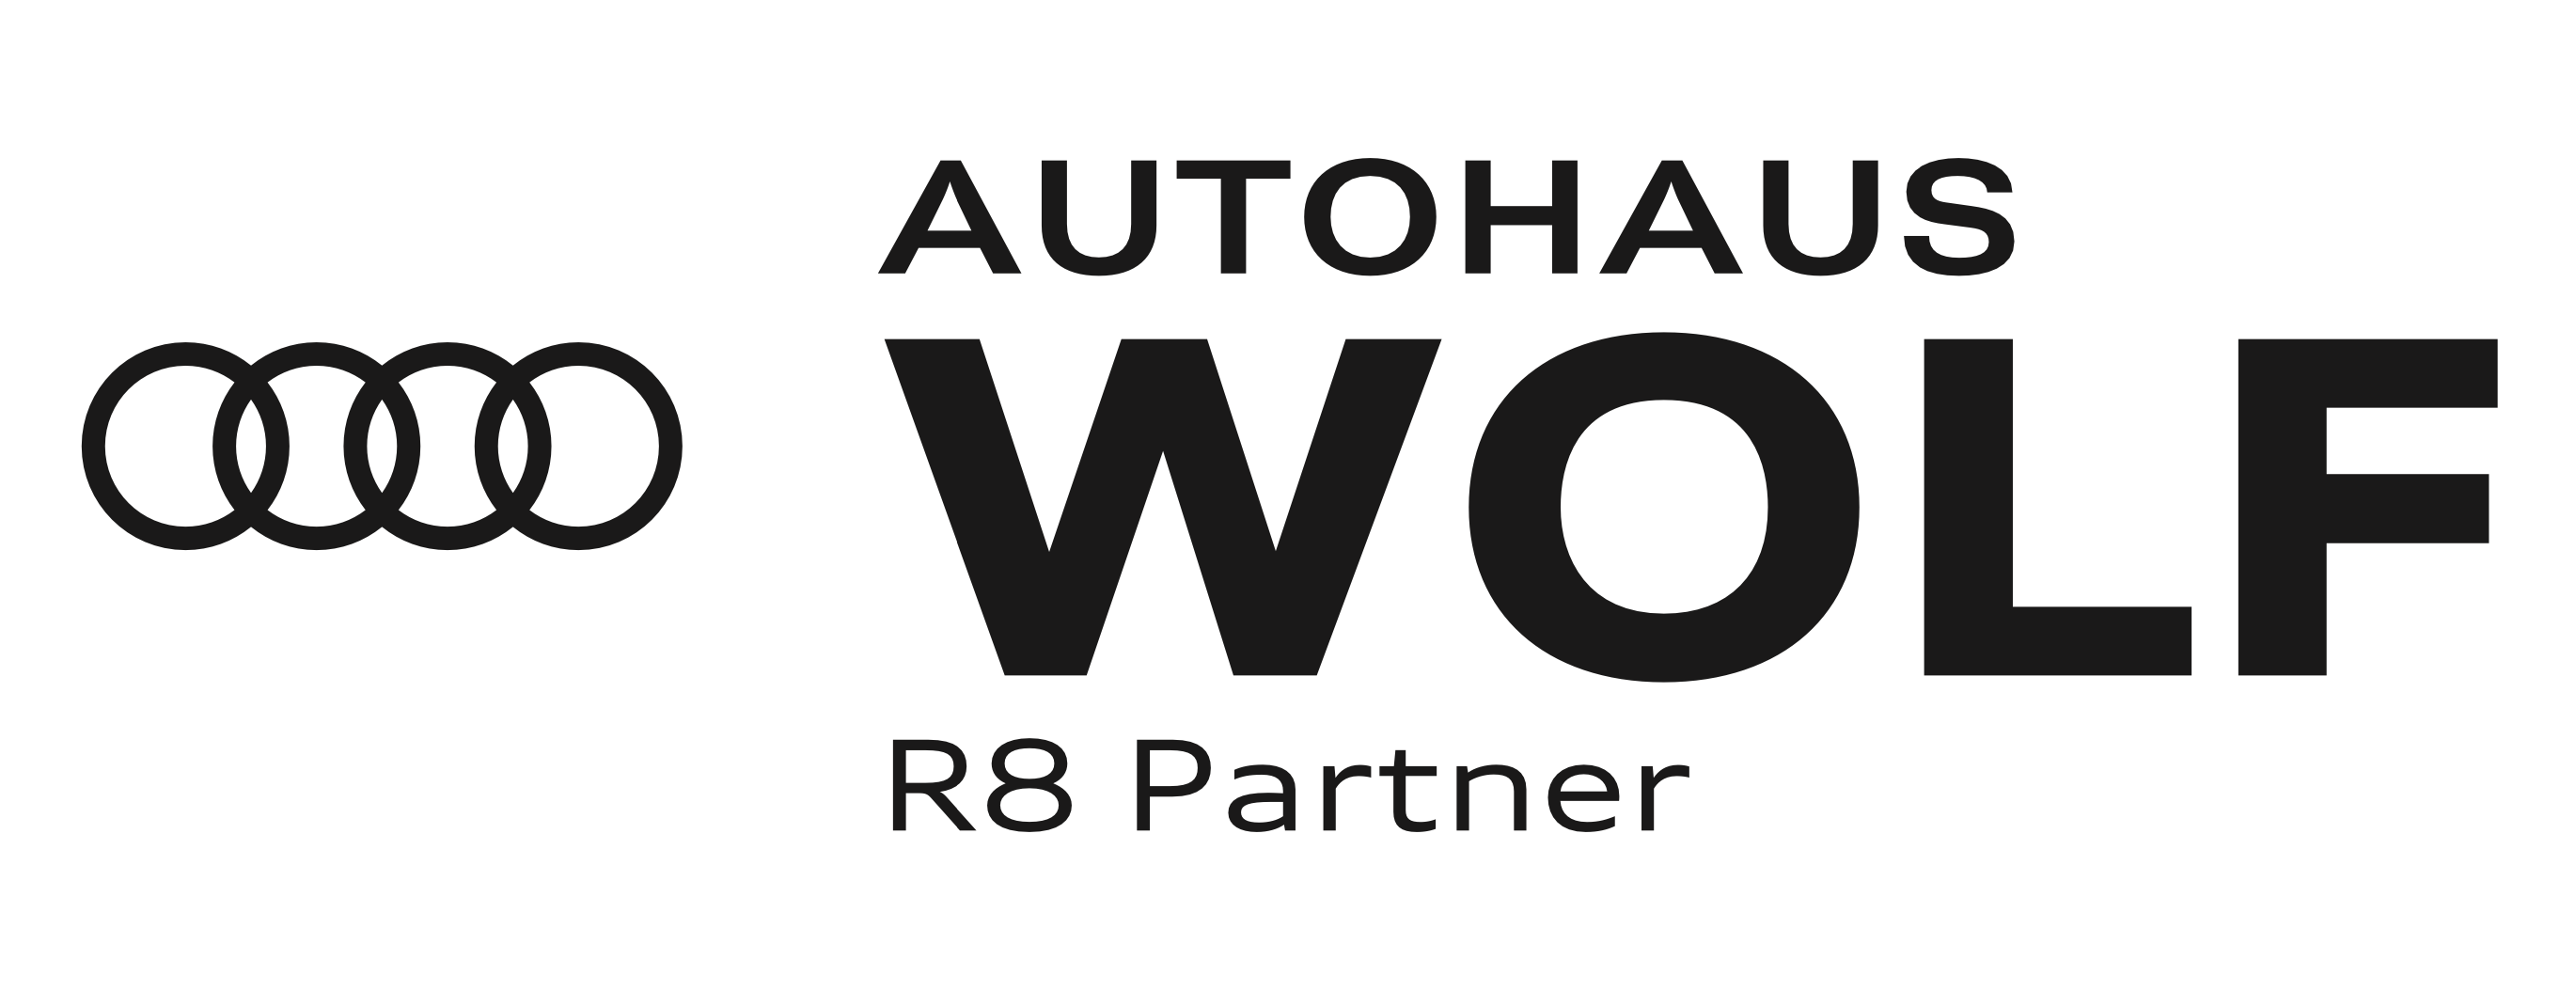 AutohausWolf_Audi_R8Partner_2